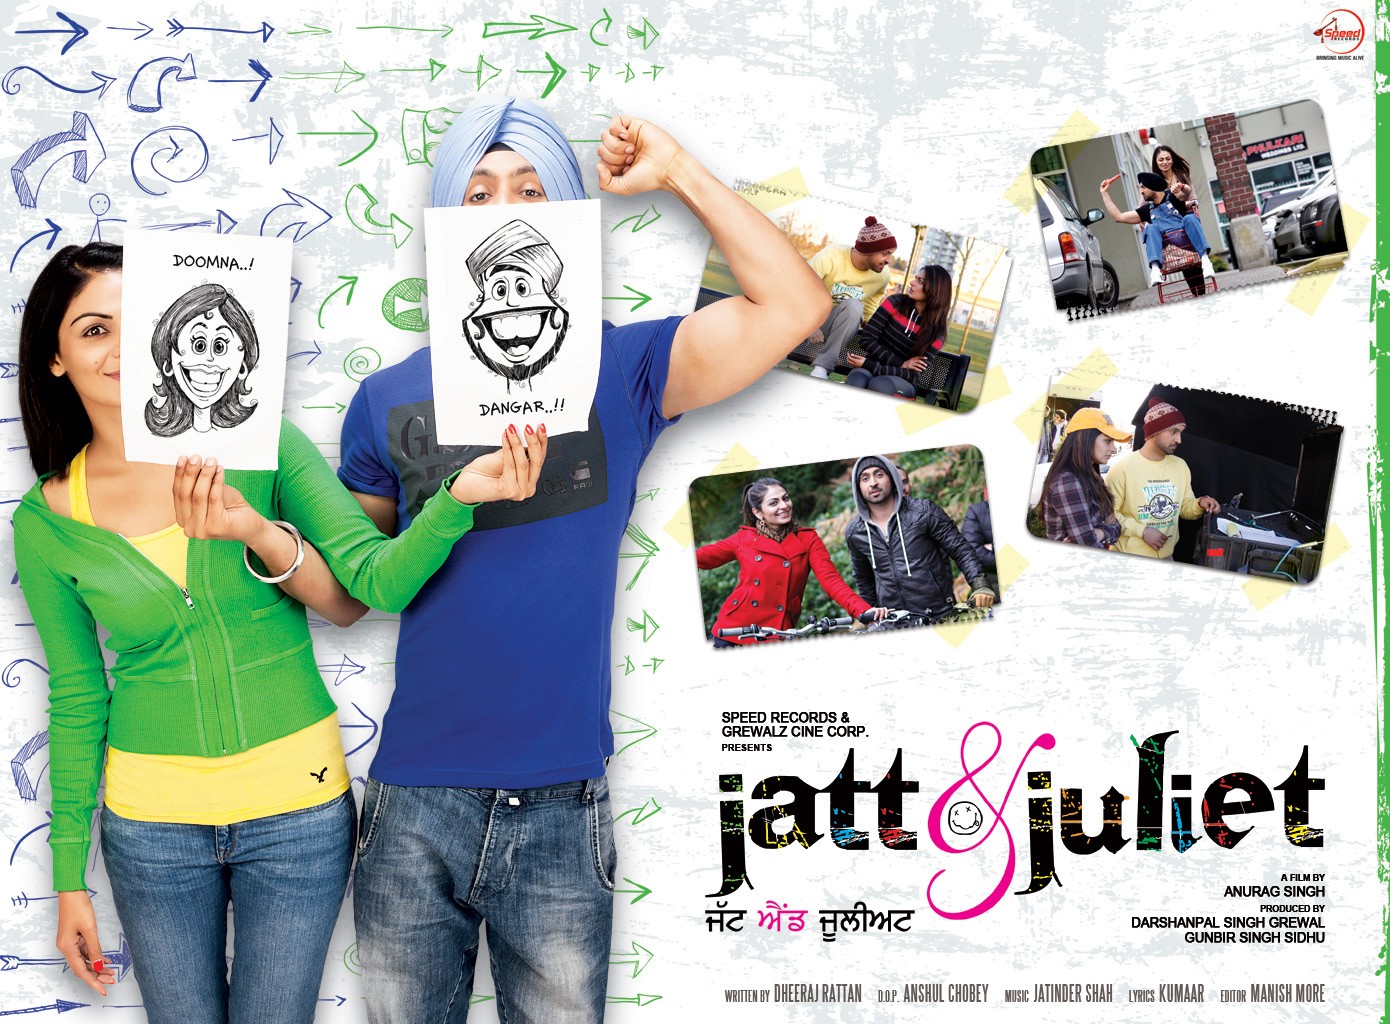 Extra Large Movie Poster Image for Jatt & Juliet (#8 of 9)